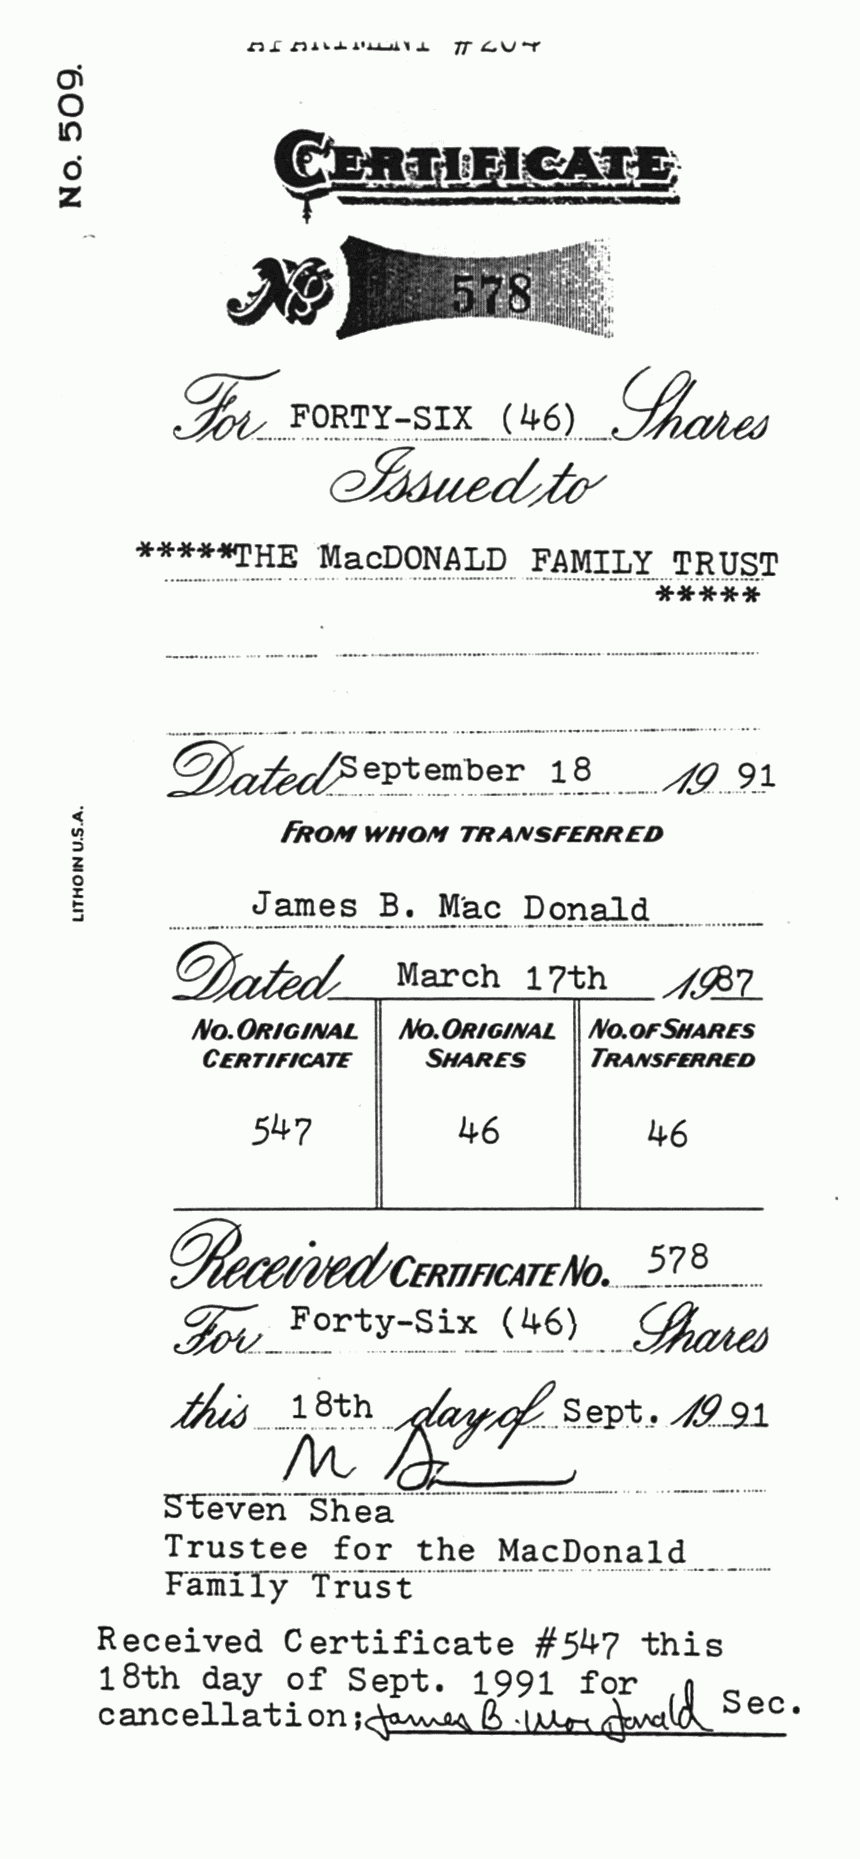 September 18, 1991: Certificate for Transfer of Shares from MacDonald Family Trust